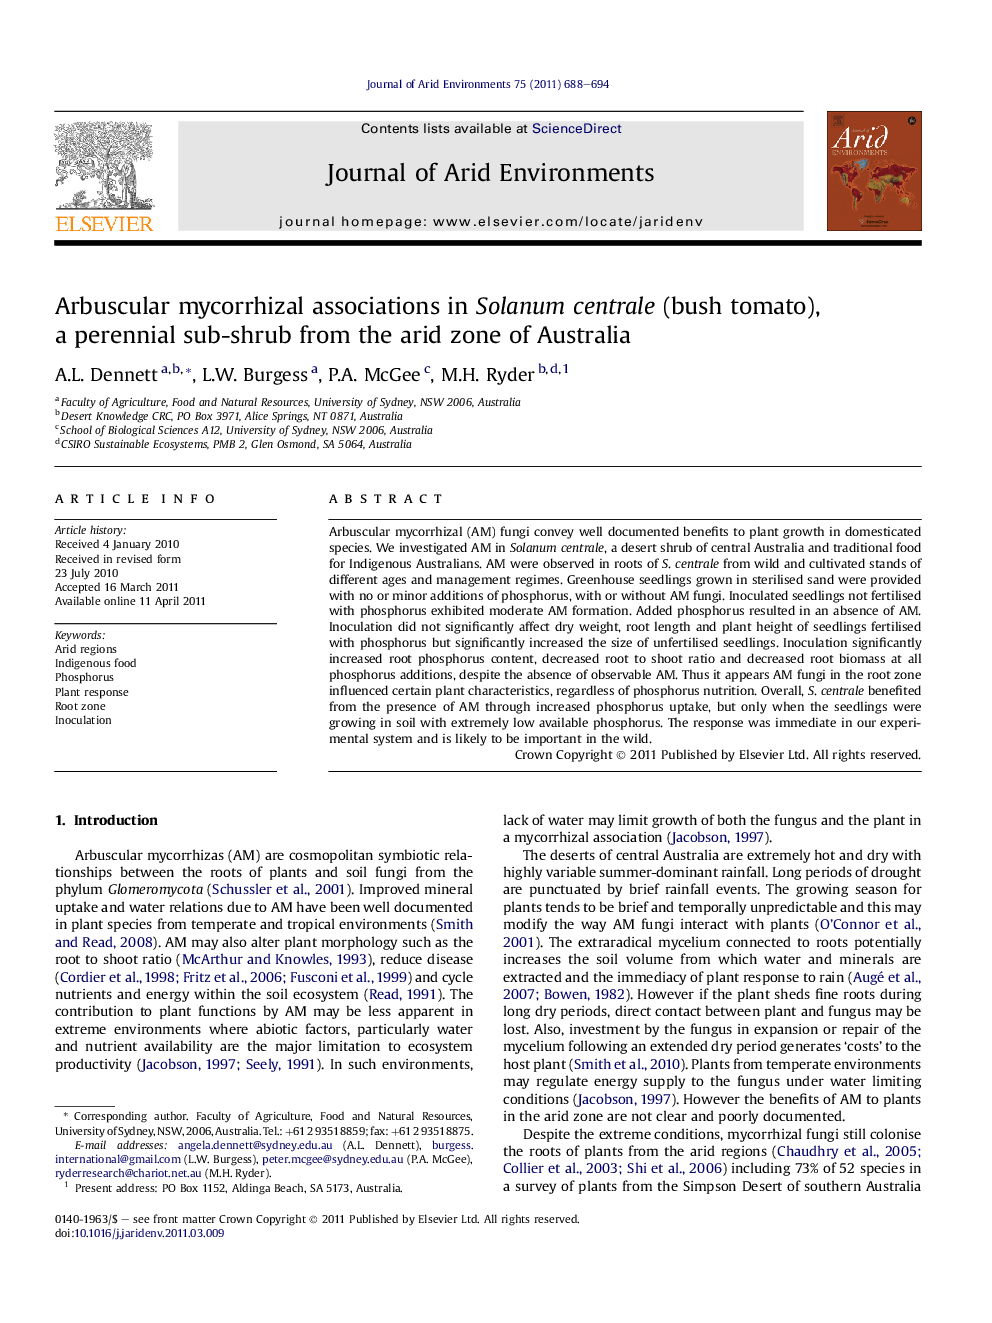 Arbuscular mycorrhizal associations in Solanum centrale (bush tomato), a perennial sub-shrub from the arid zone of Australia